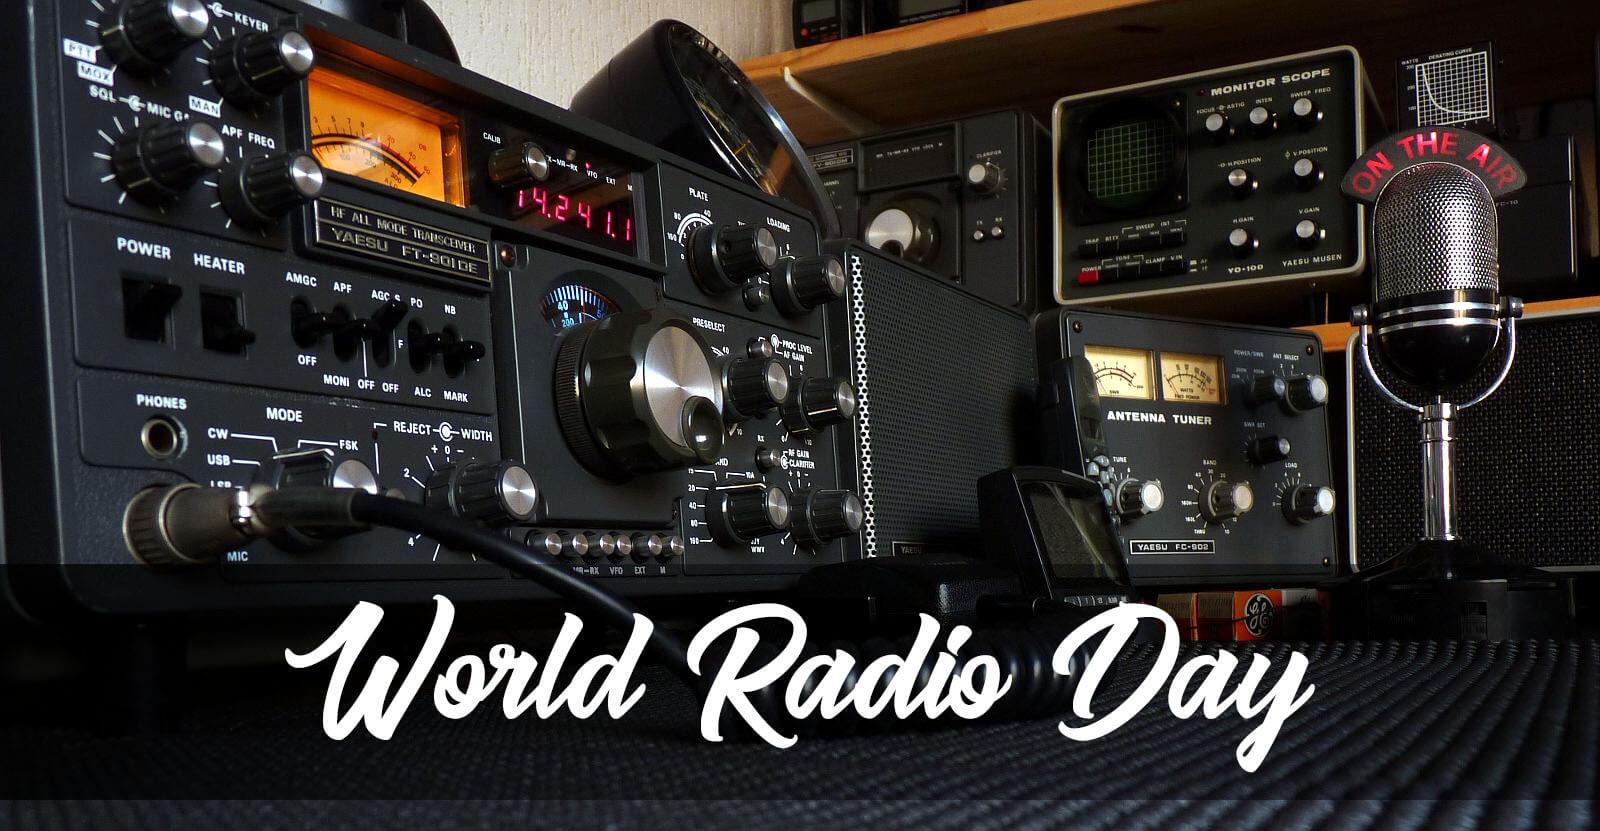 World Radio Day Wallpaper Free Download